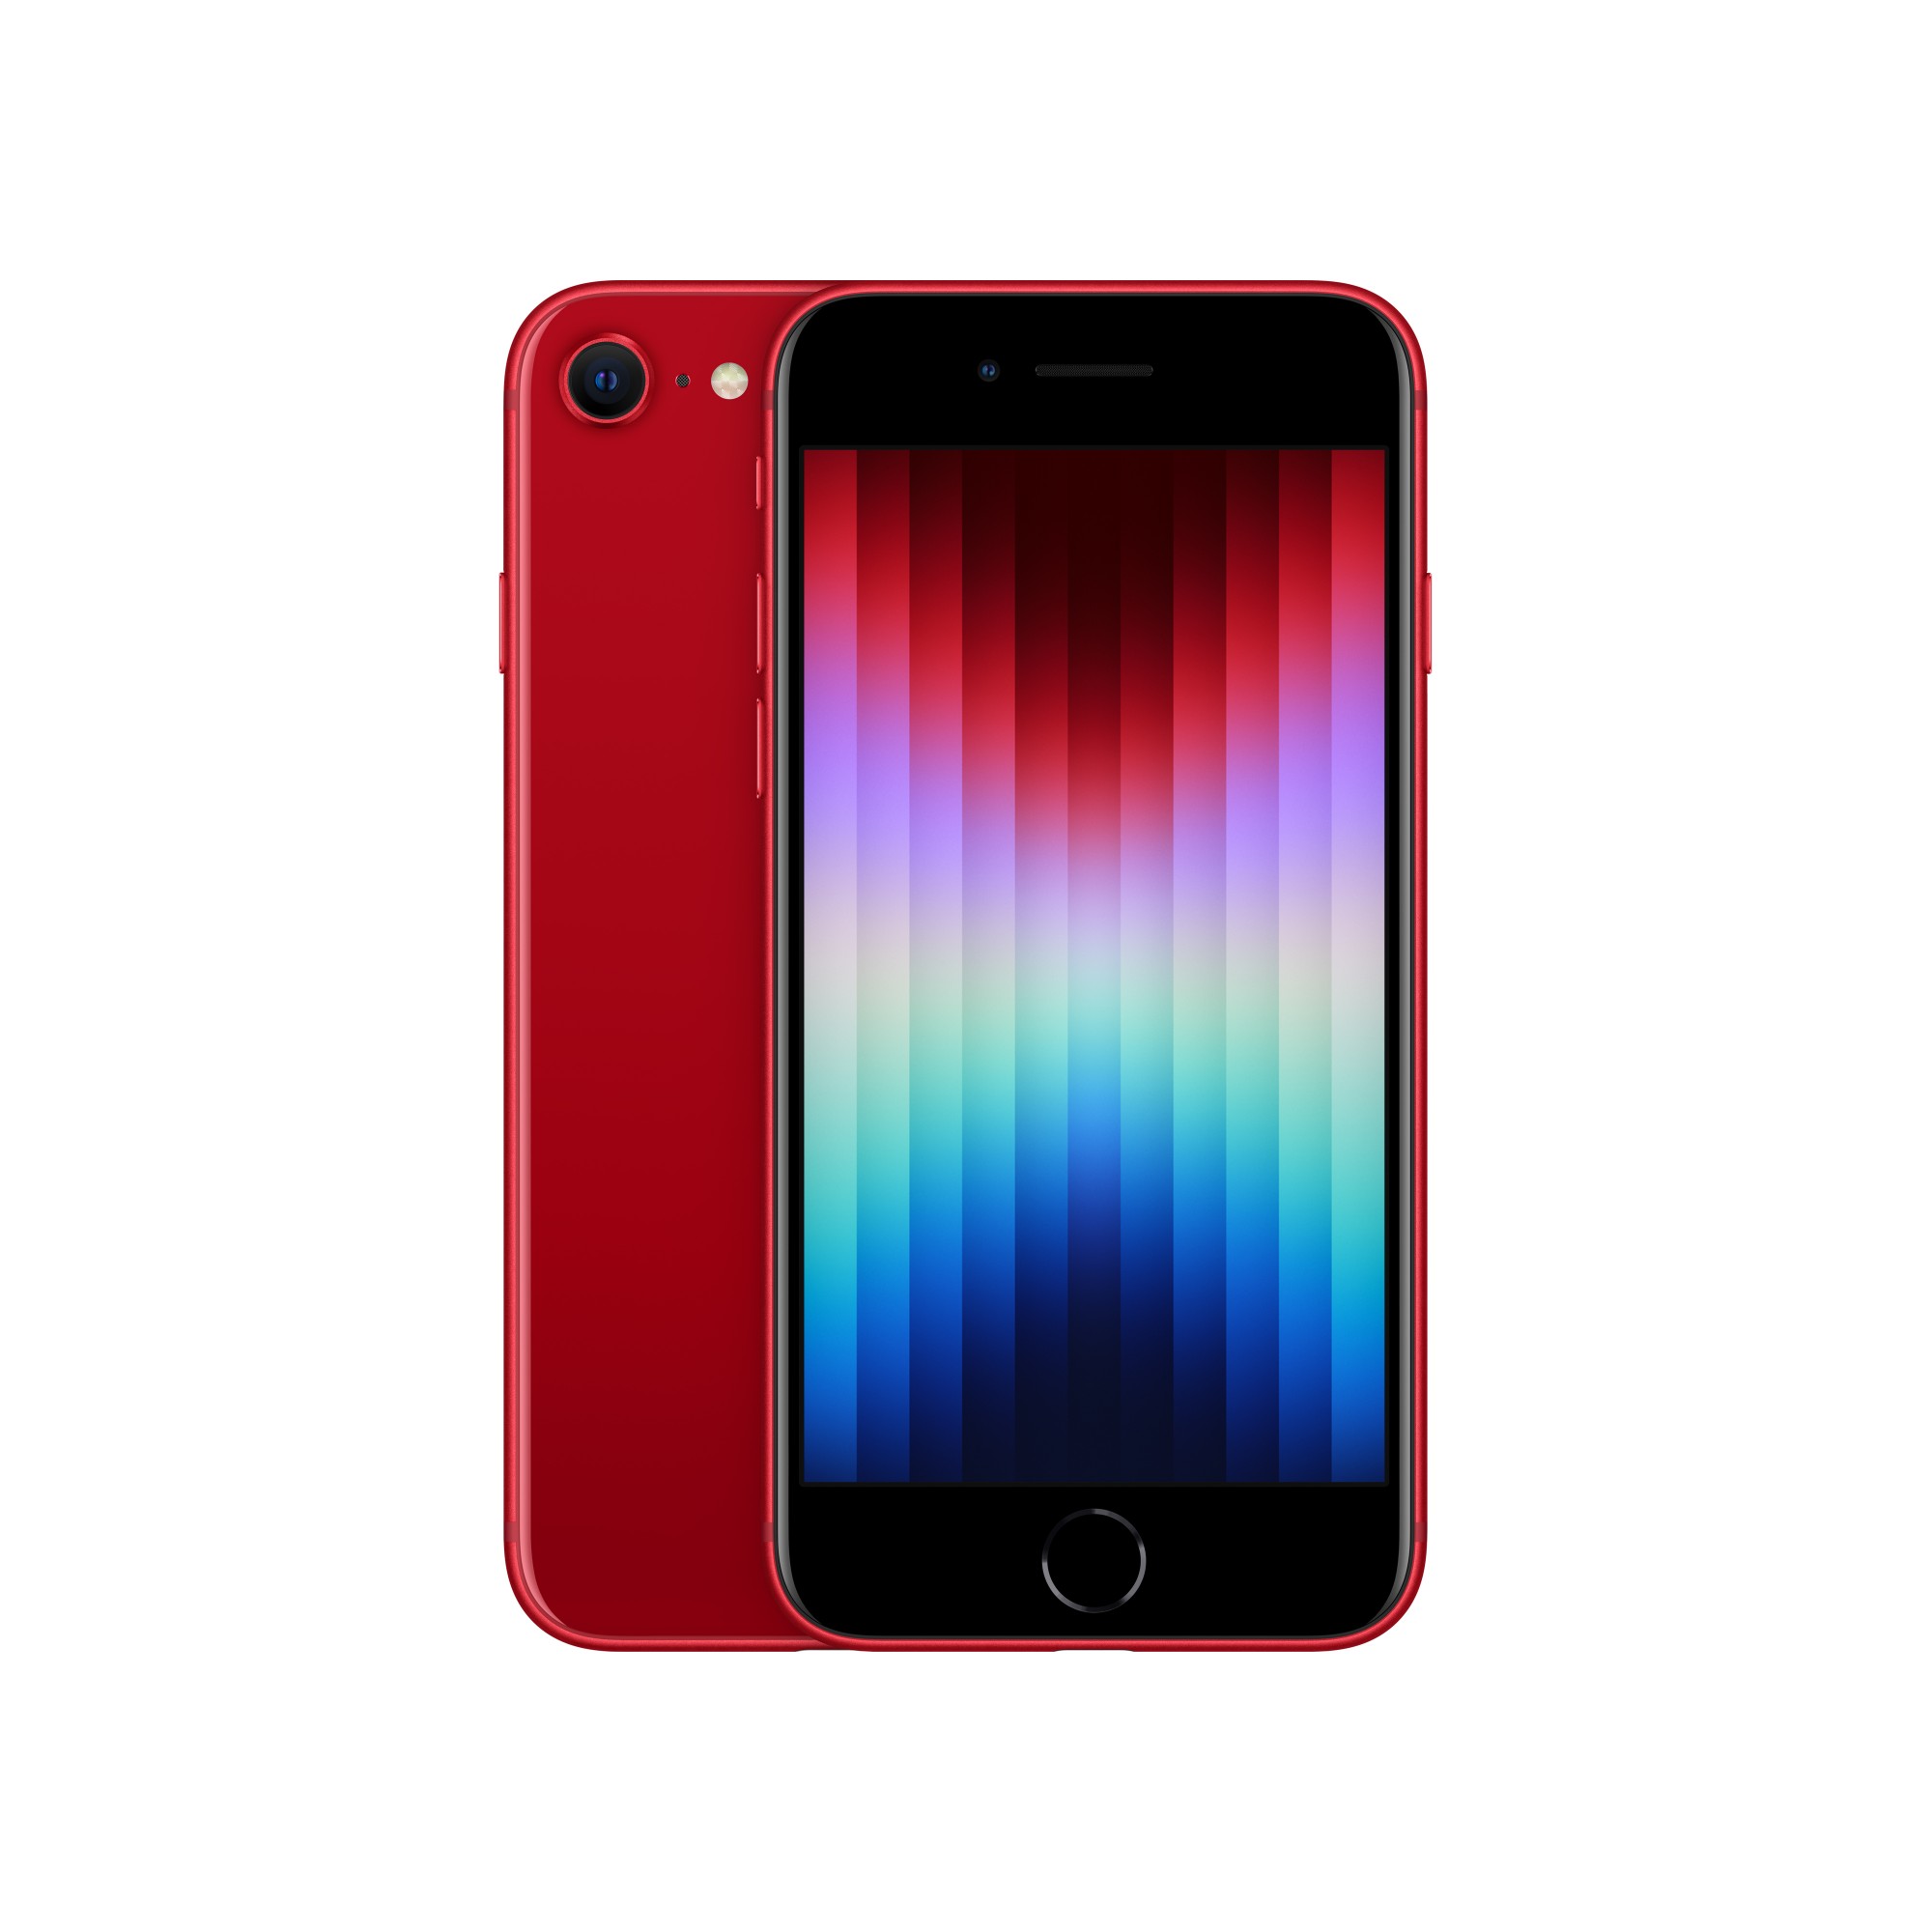 iPhone SE, 4.7" LCD, 1334 x 750, 326ppi, 128GB, A15 Bionic, LTE, 802.11ax, Bluetooth 5.0, NFC, 12MP + 7MP, IP67, iOS 15